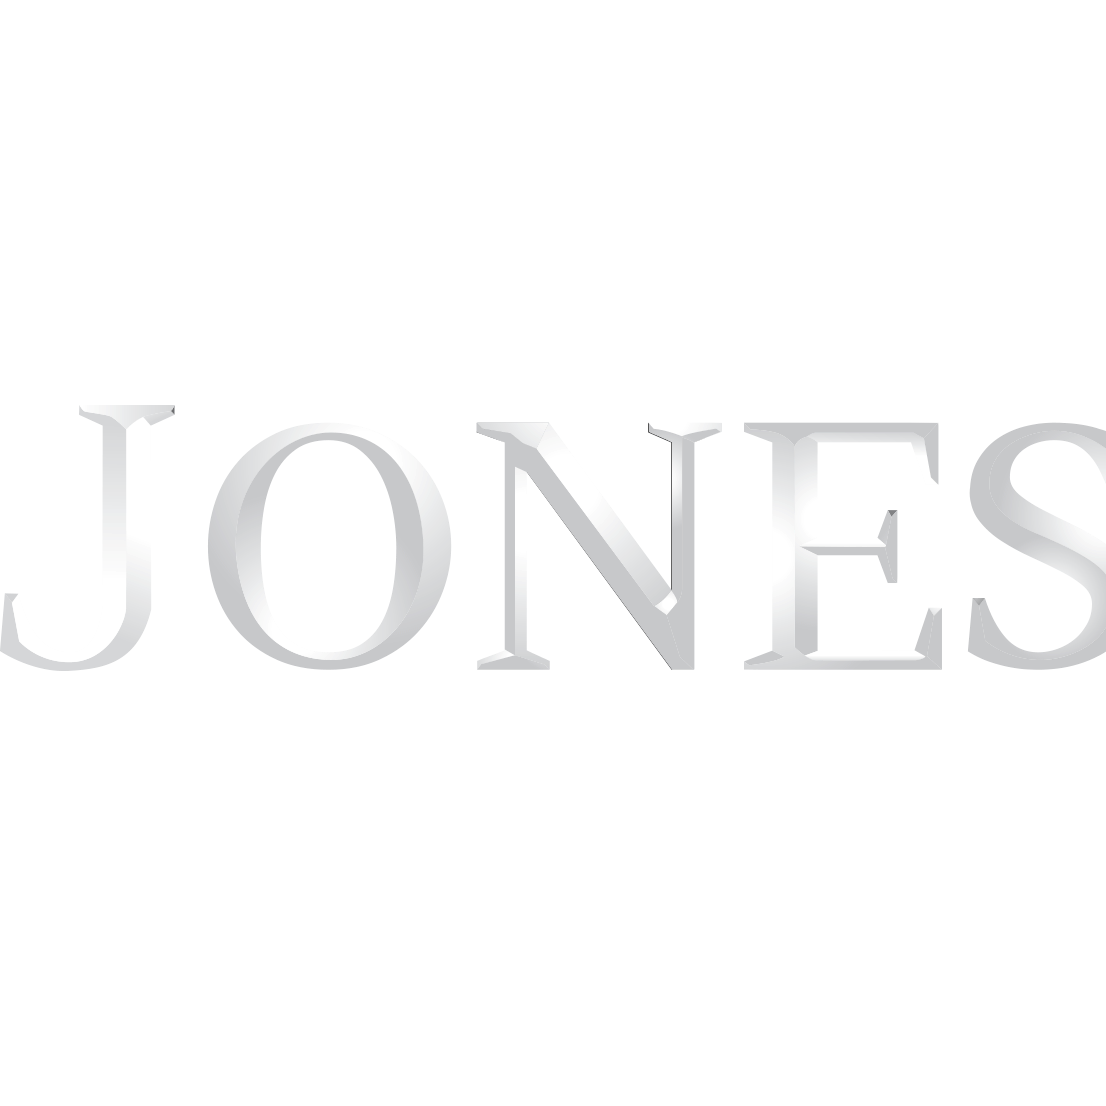 Jones Ford - Savannah, TN 38372 - (888)802-2903 | ShowMeLocal.com